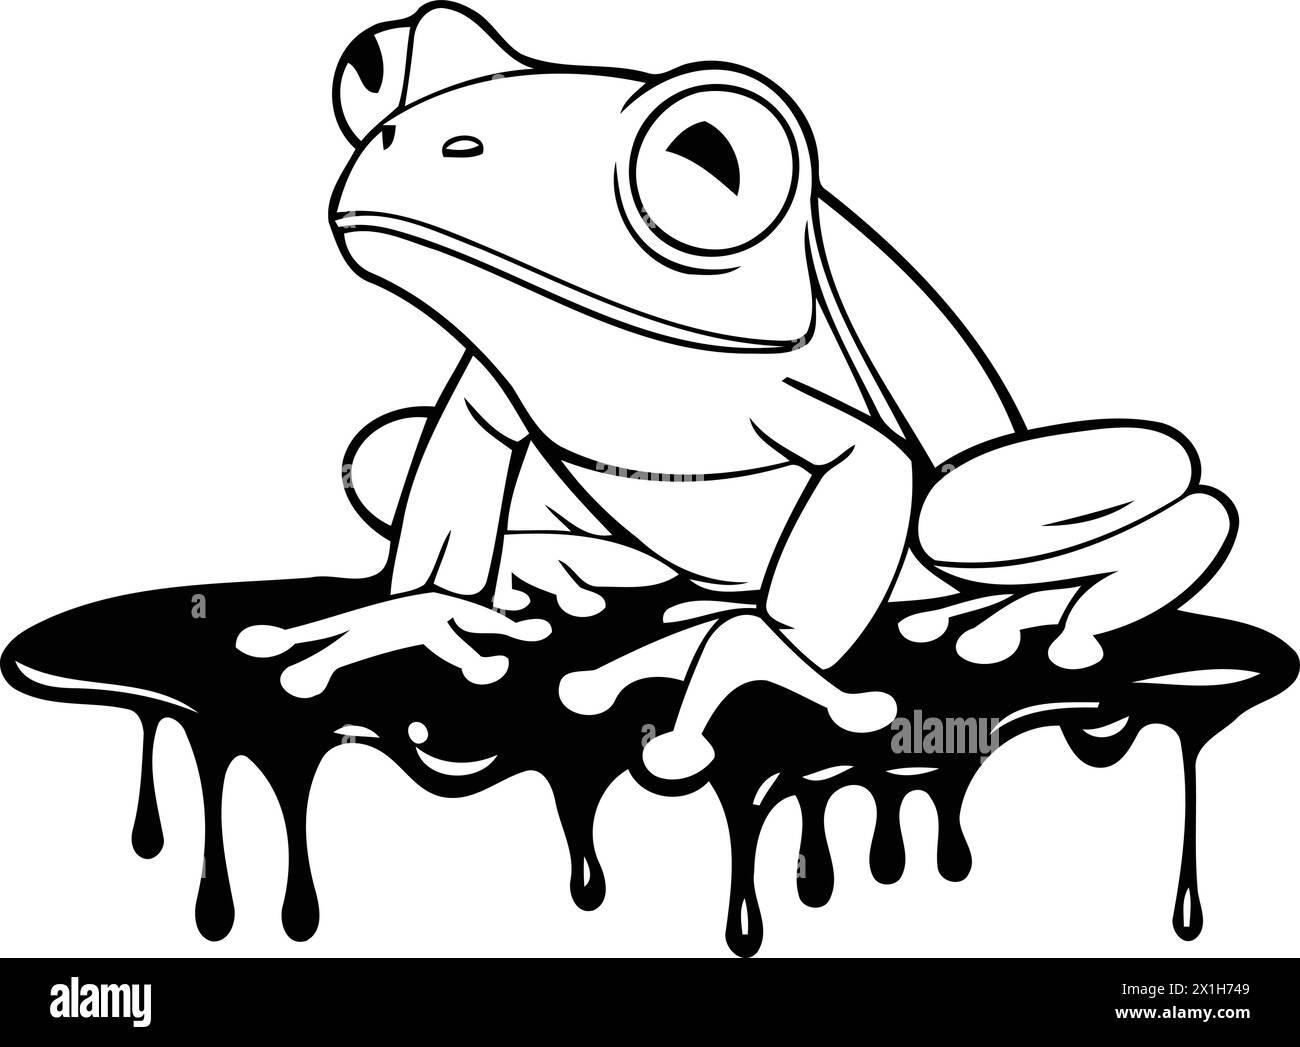 Frog in the rain. Vector illustration of a cartoon frog. Stock Vector